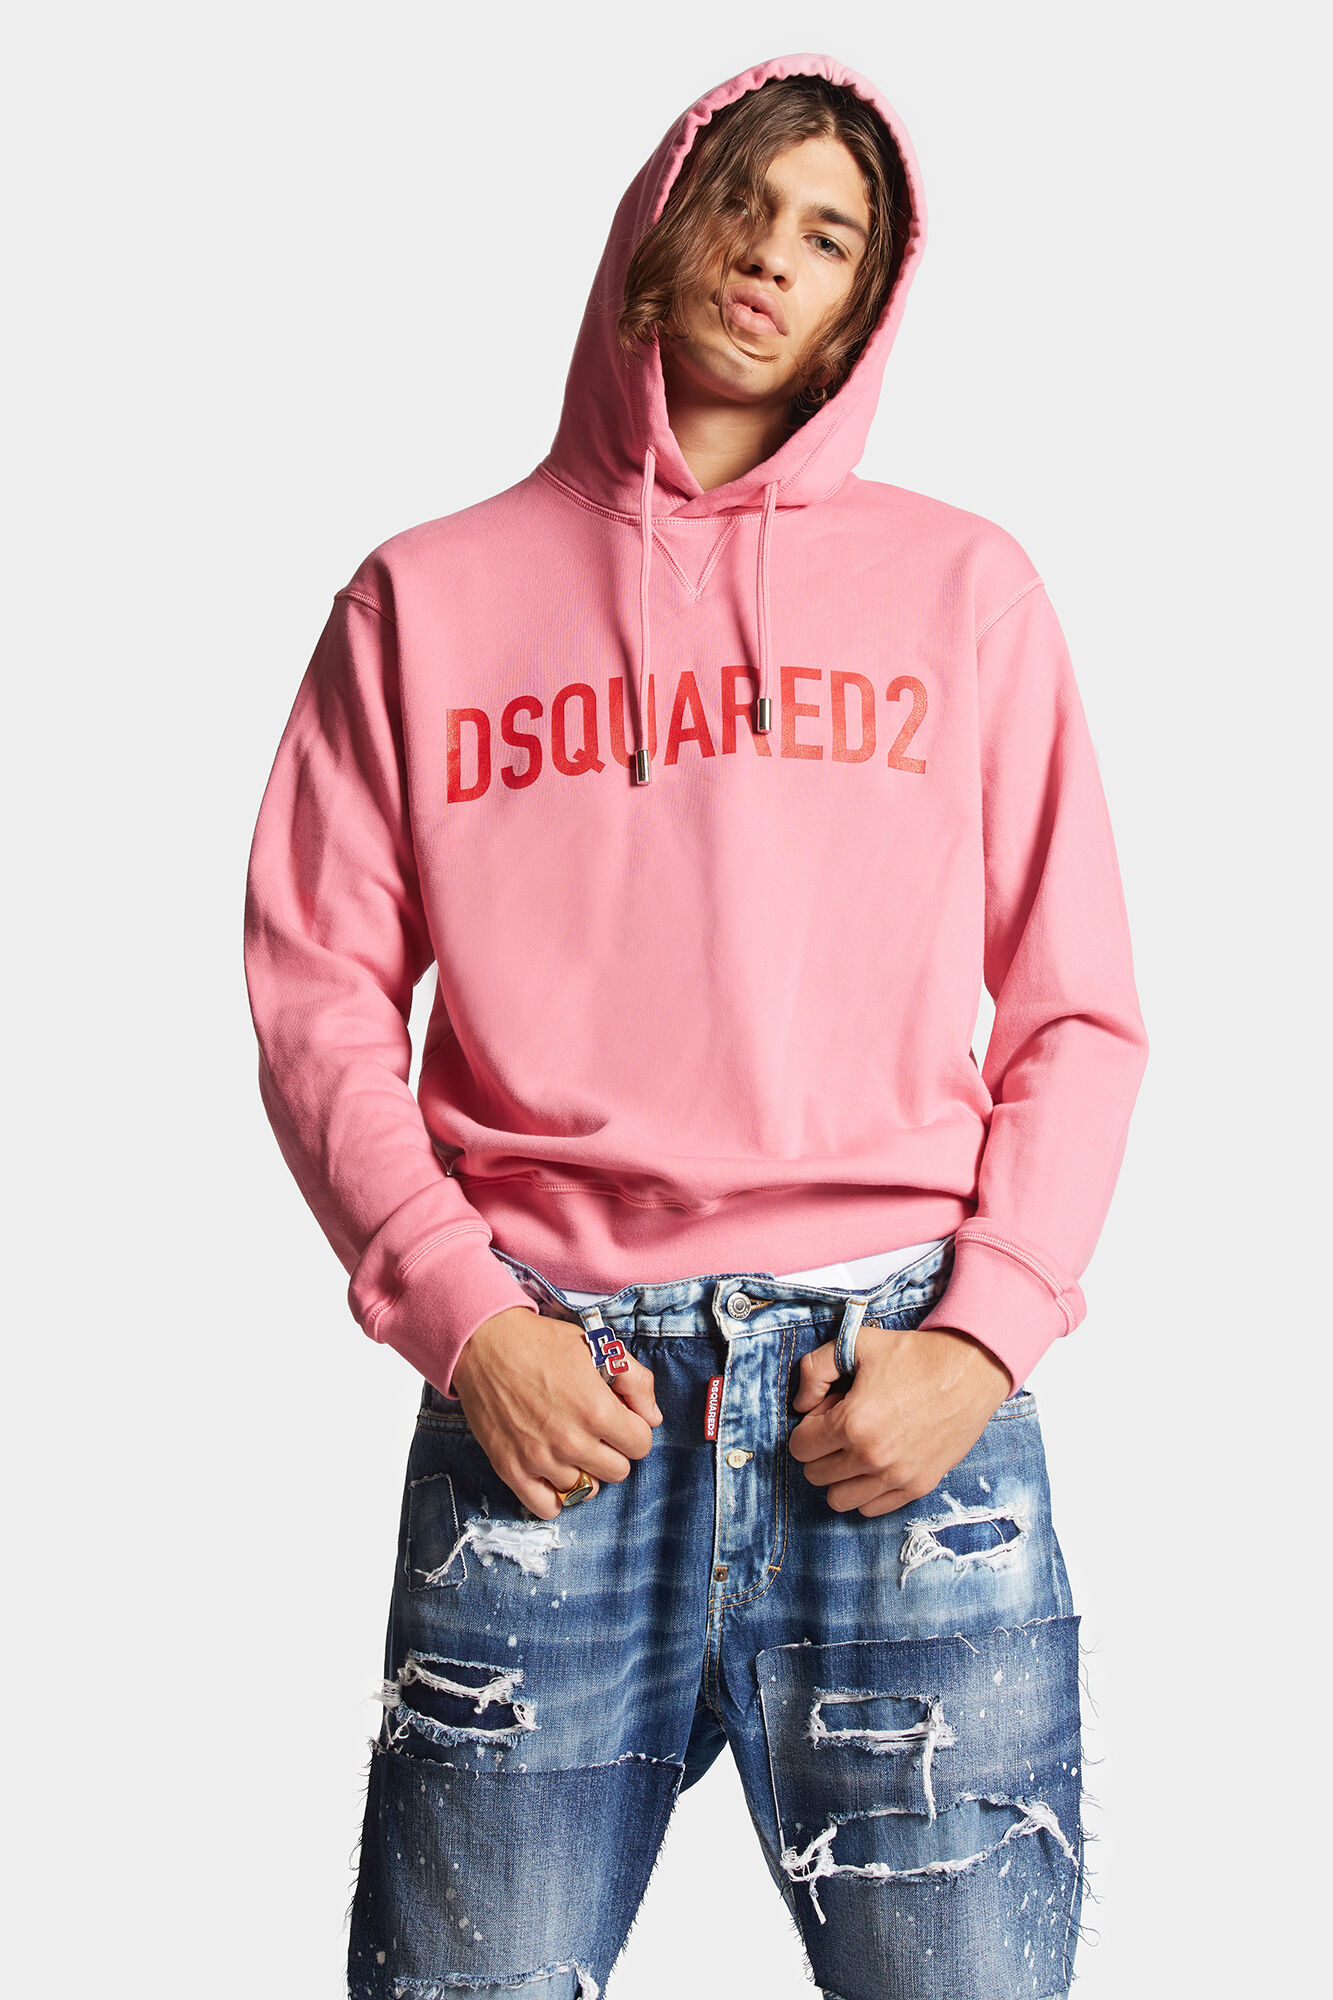 Men's Sweatshirts and Hoodies | DSQUARED2